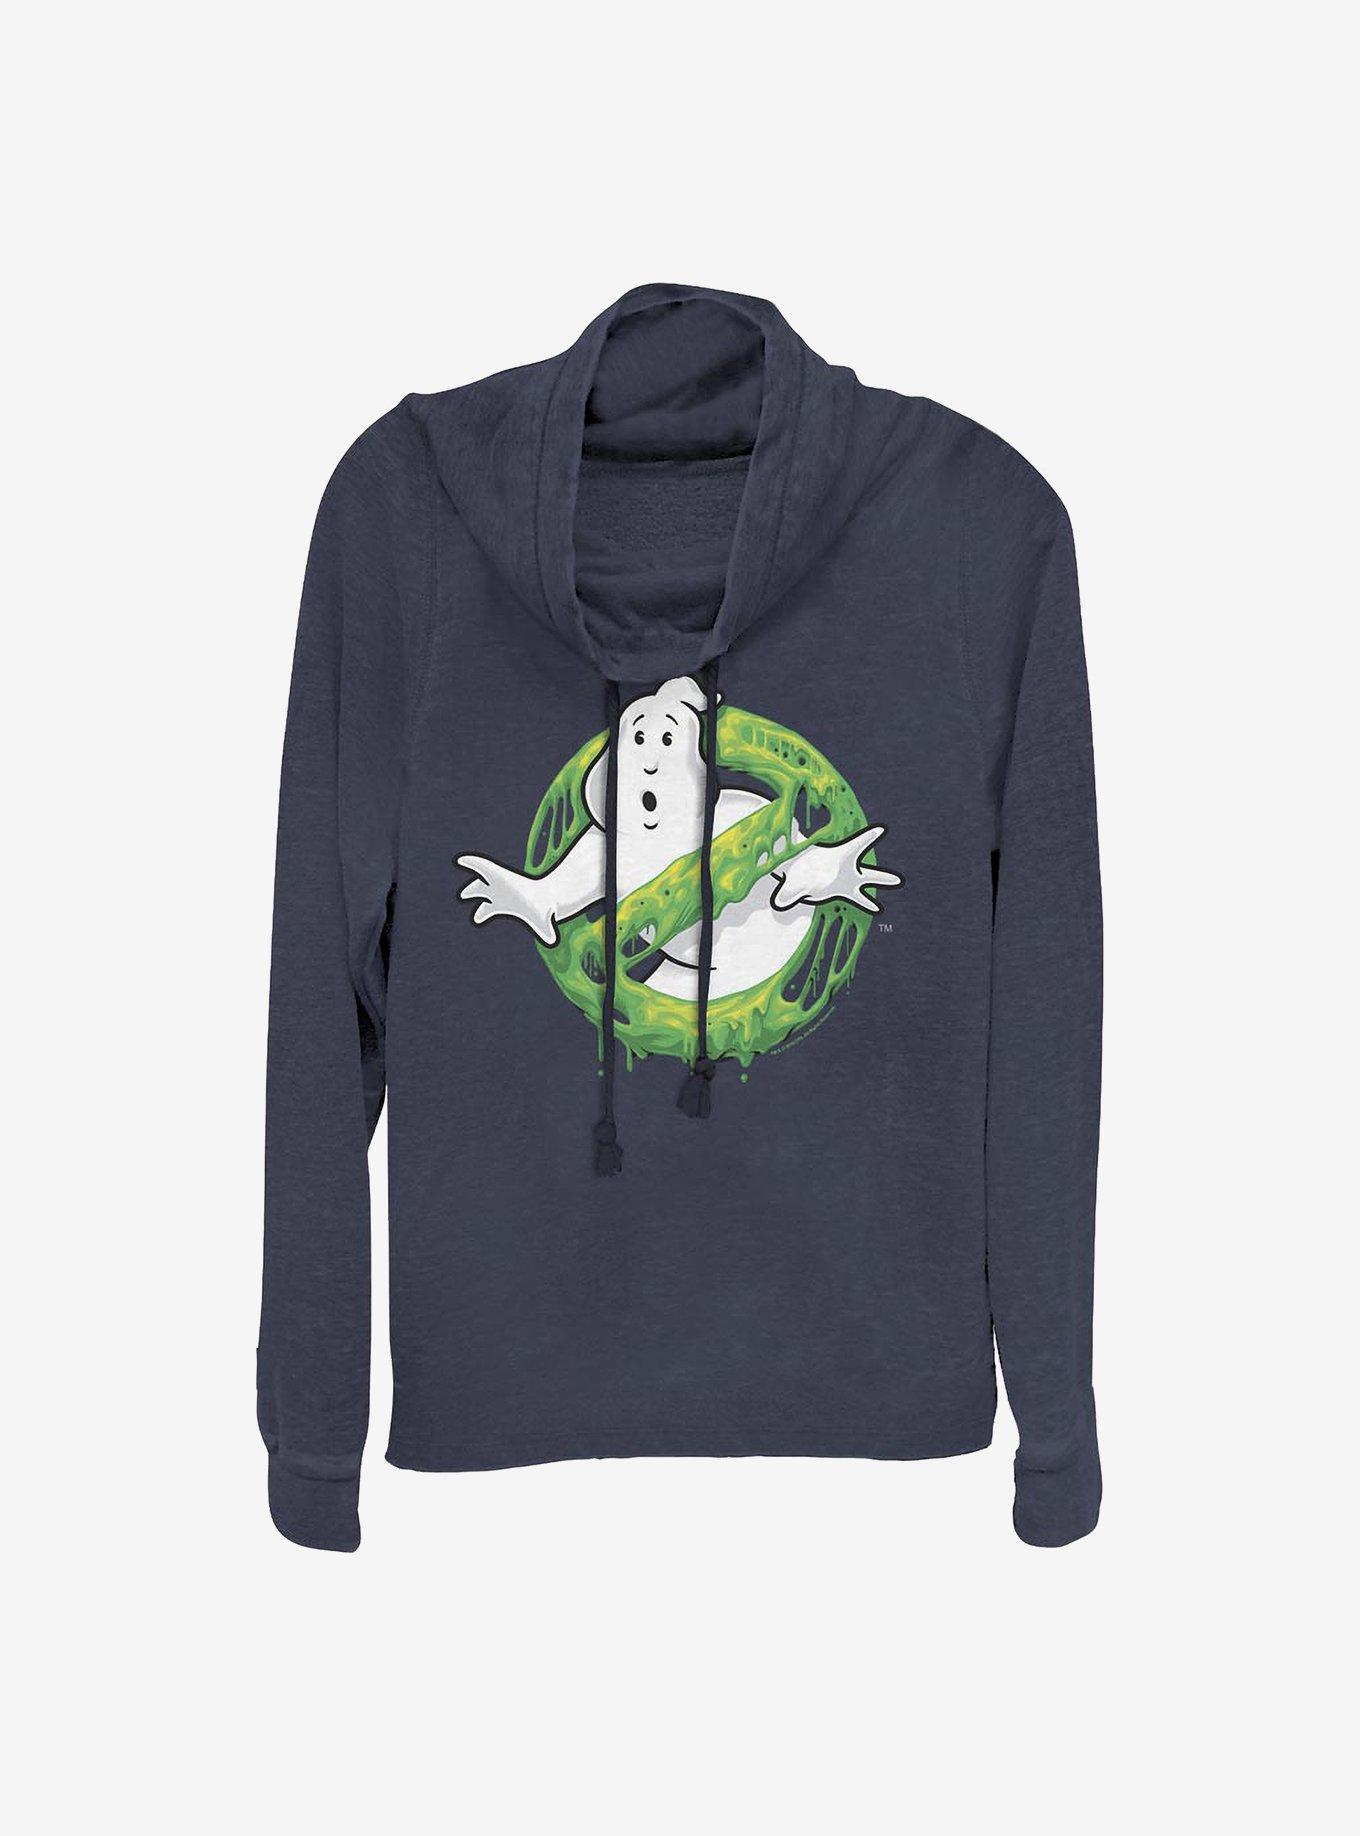 Ghostbusters Ghost Logo Green Slime Cowl Neck Long-Sleeve Girls Top, NAVY, hi-res